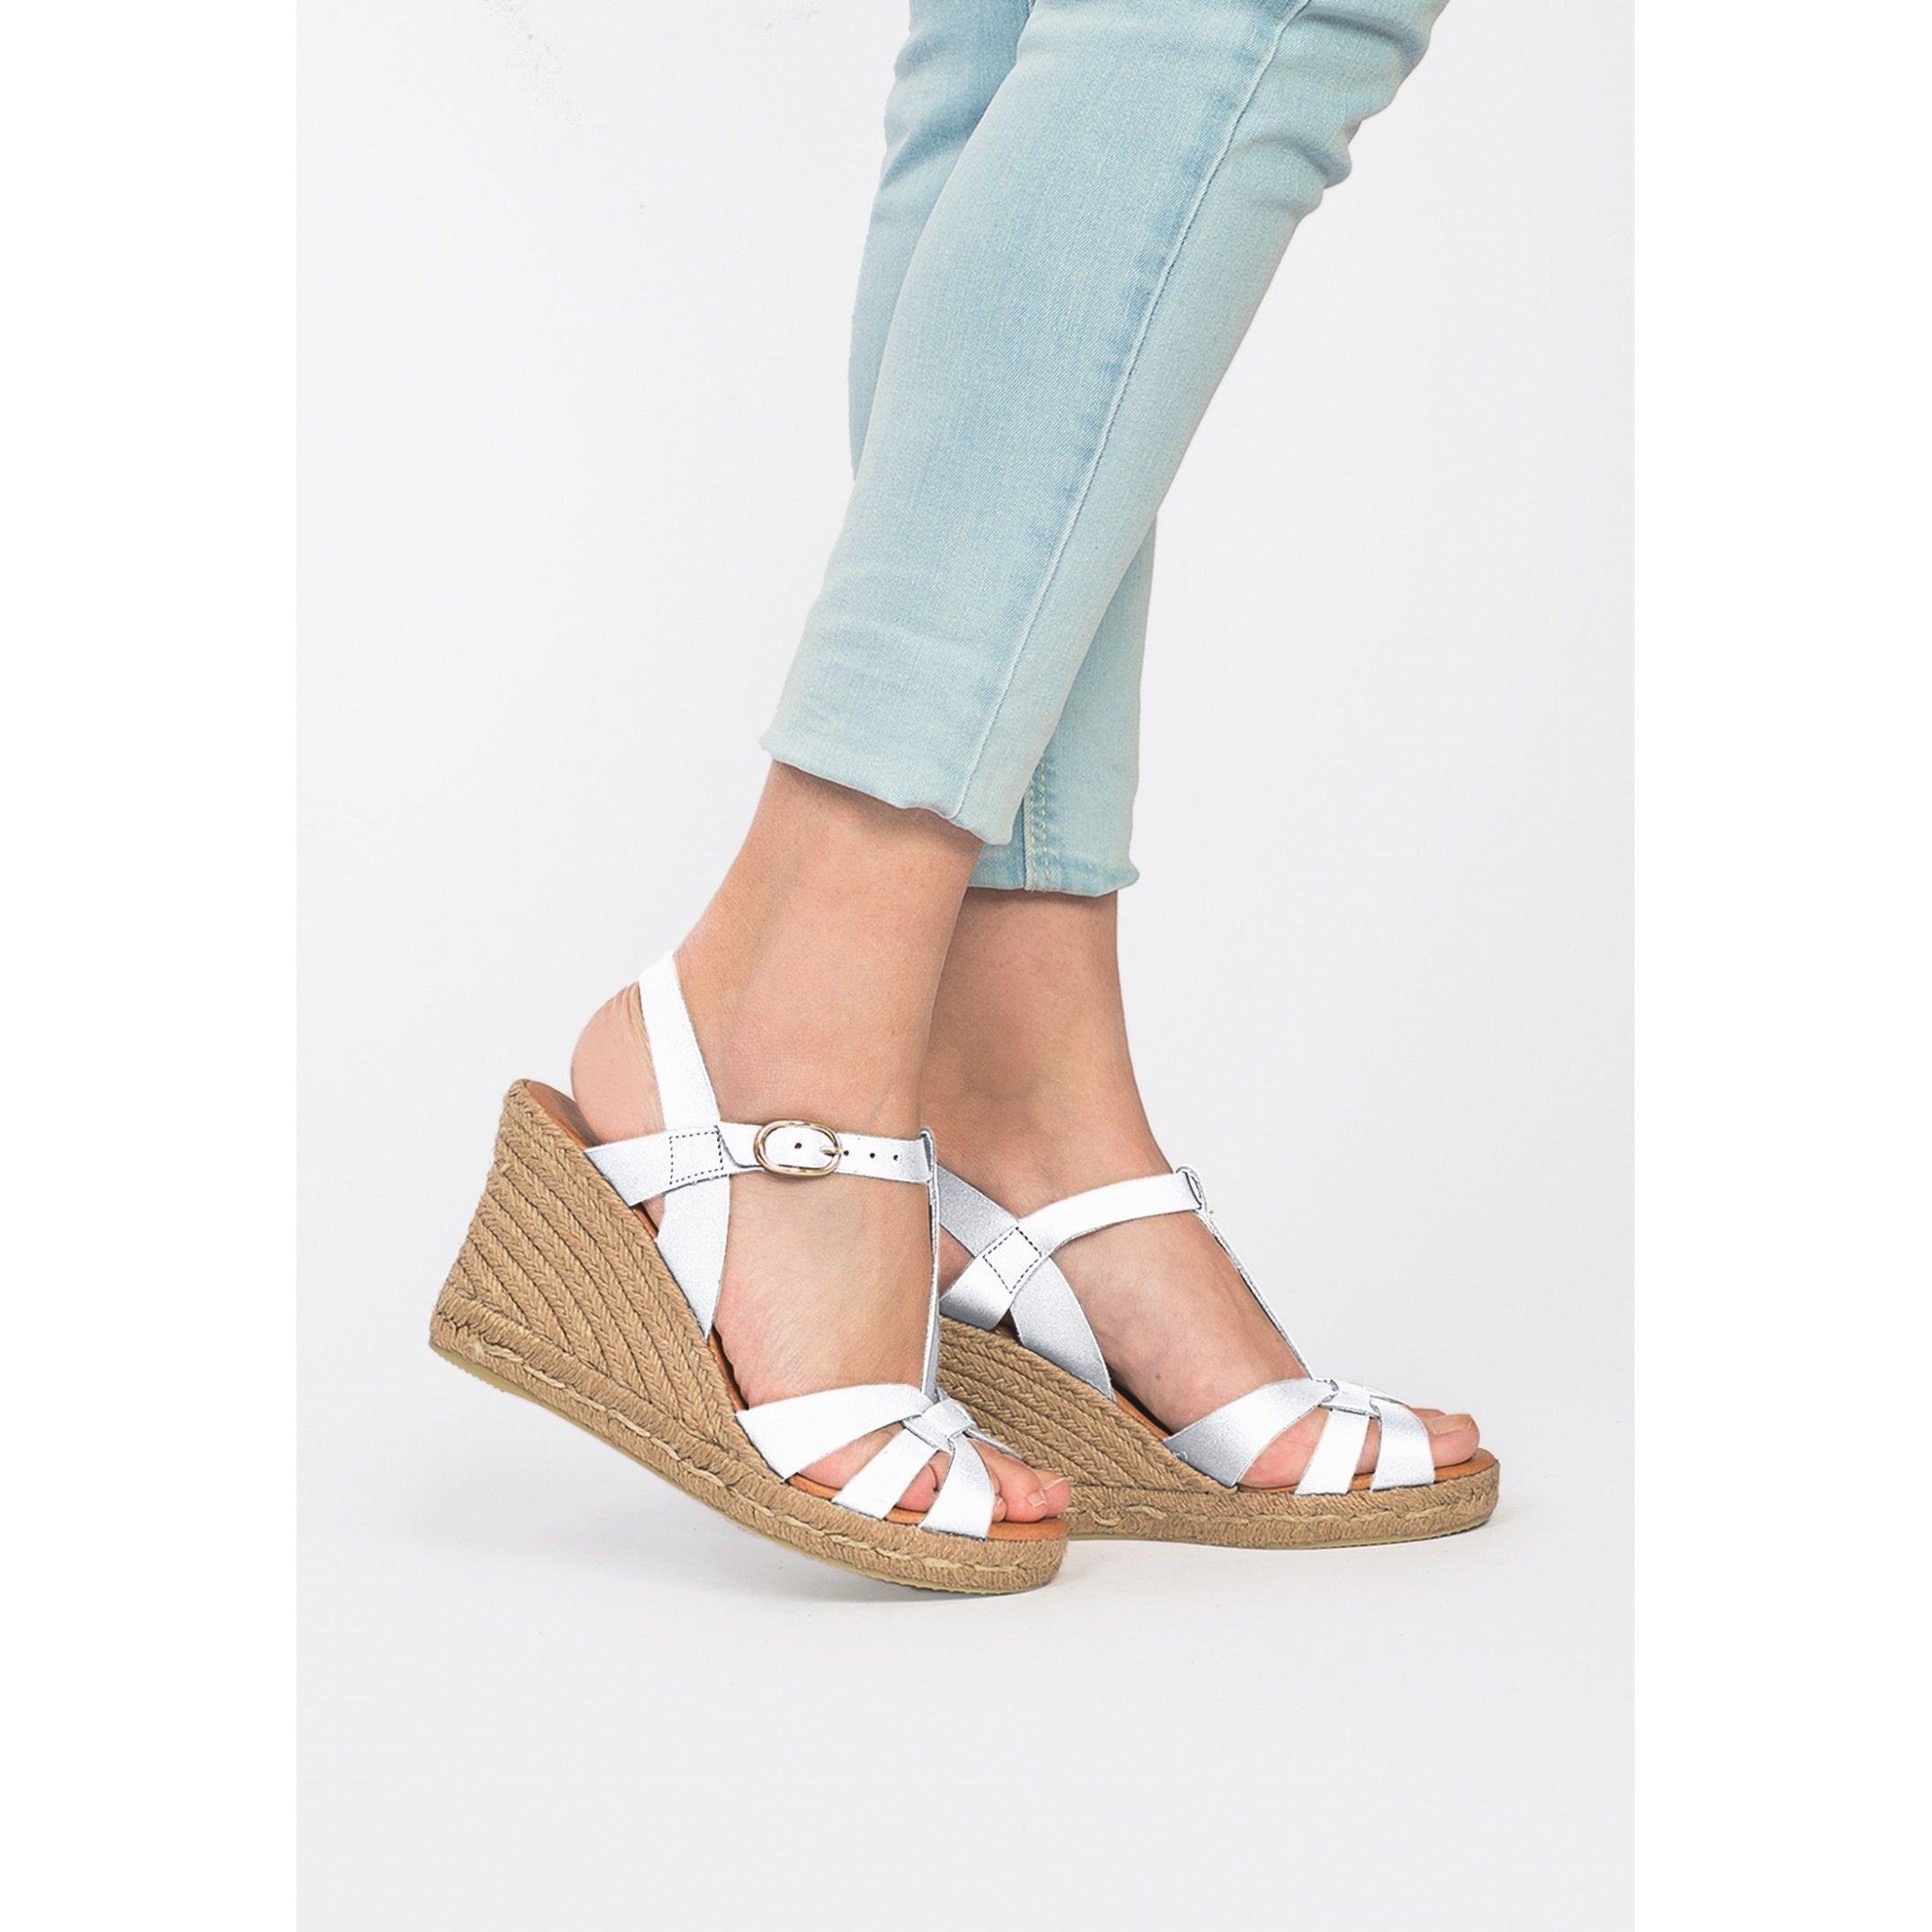 Eva Lopez Ankle Strap Wedge Sandals Women Summer